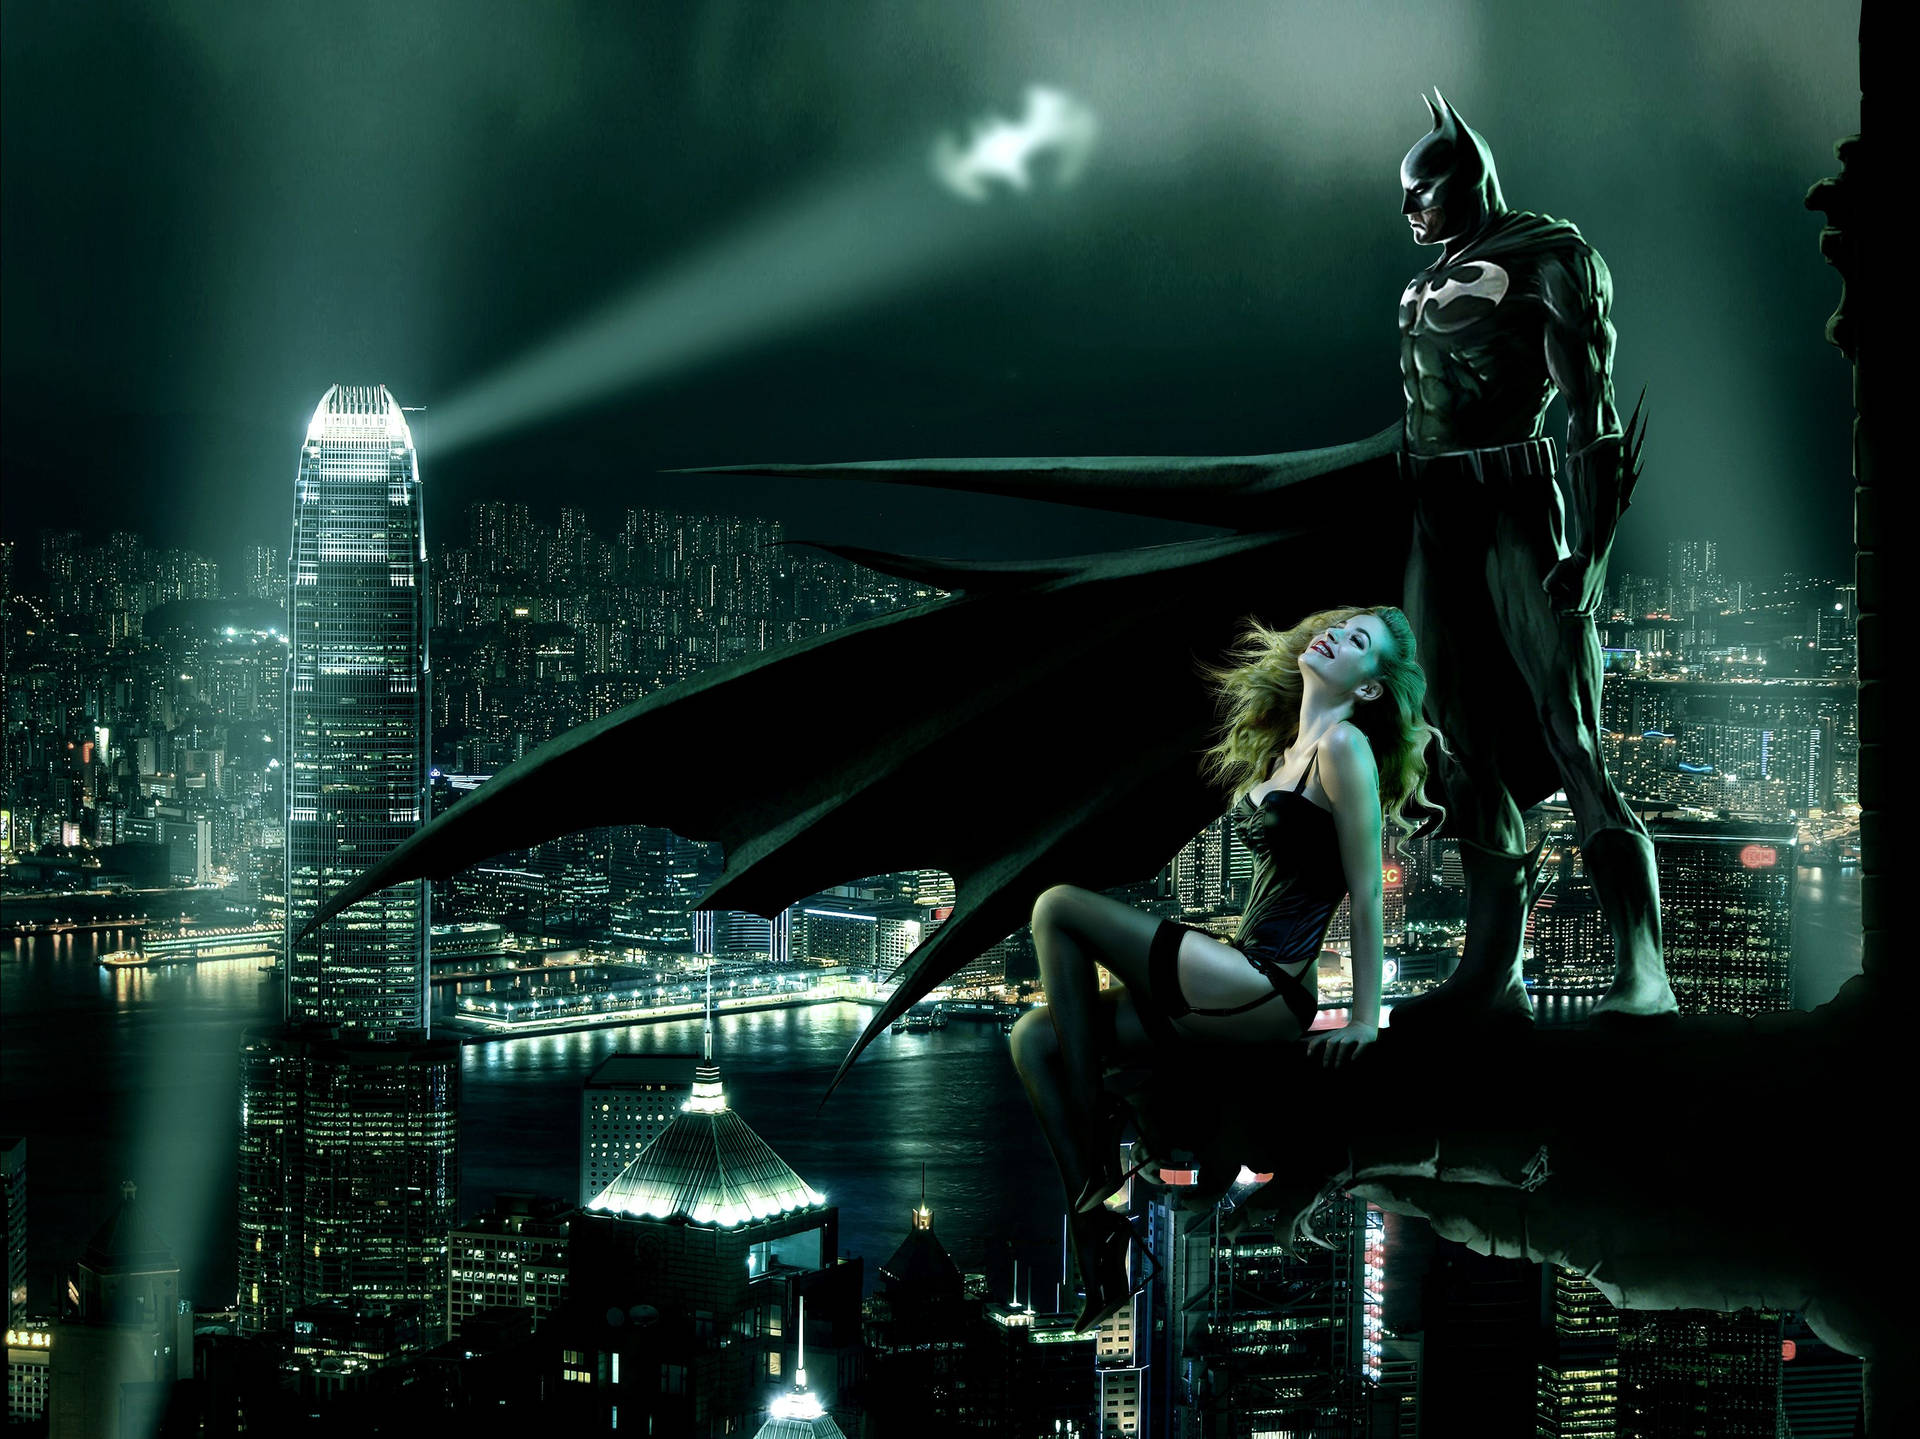 Gotham Realistic Digital Illustration Wallpaper